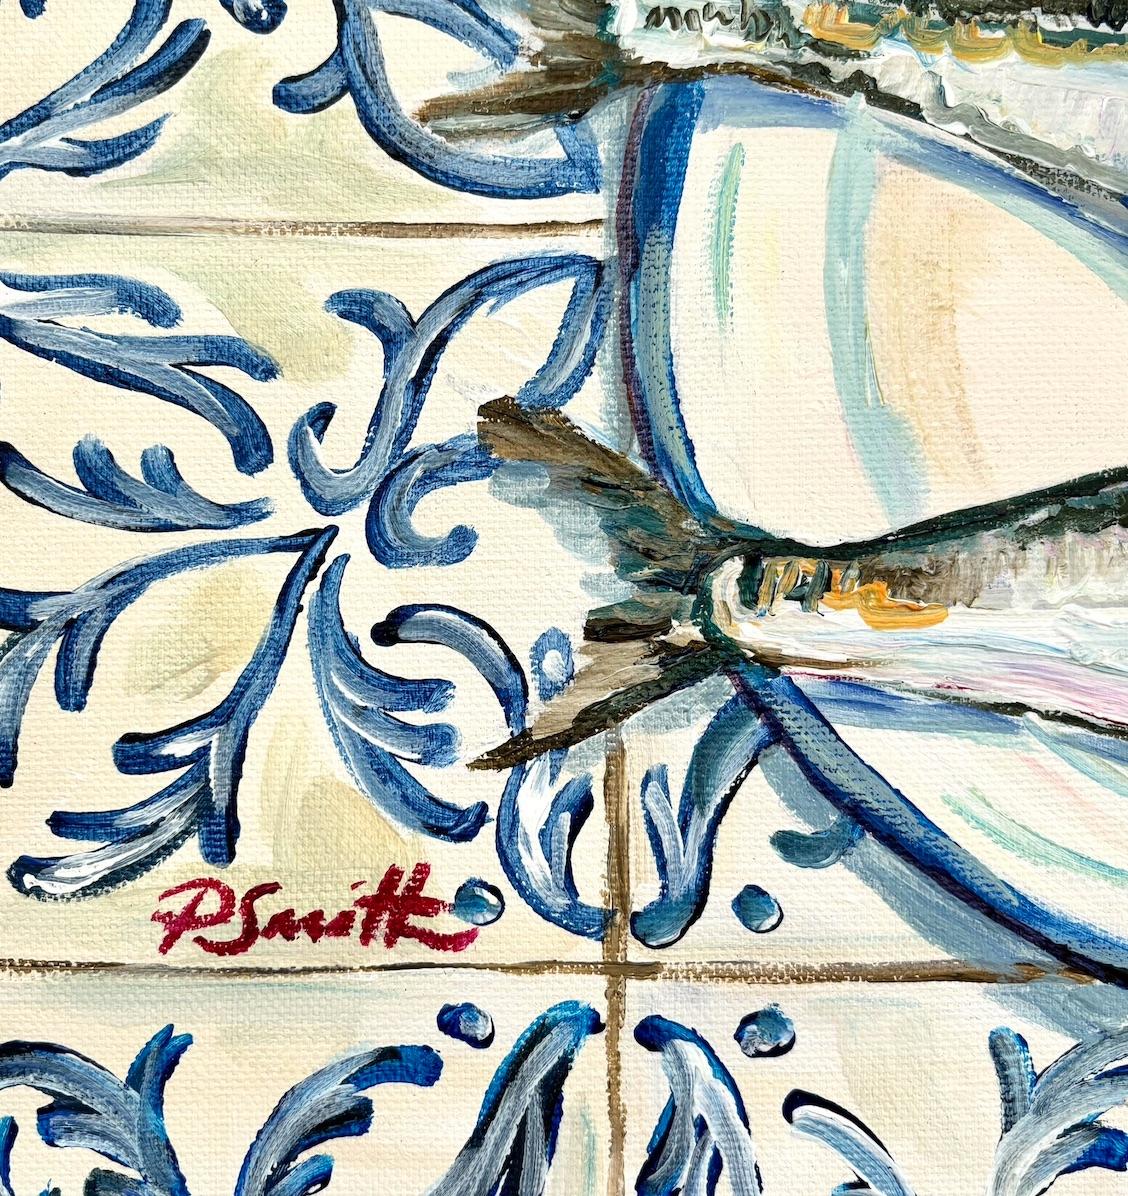 Two Sardines on Spanish Tiles, Original painting, Seafood, Mediterranean art For Sale 2